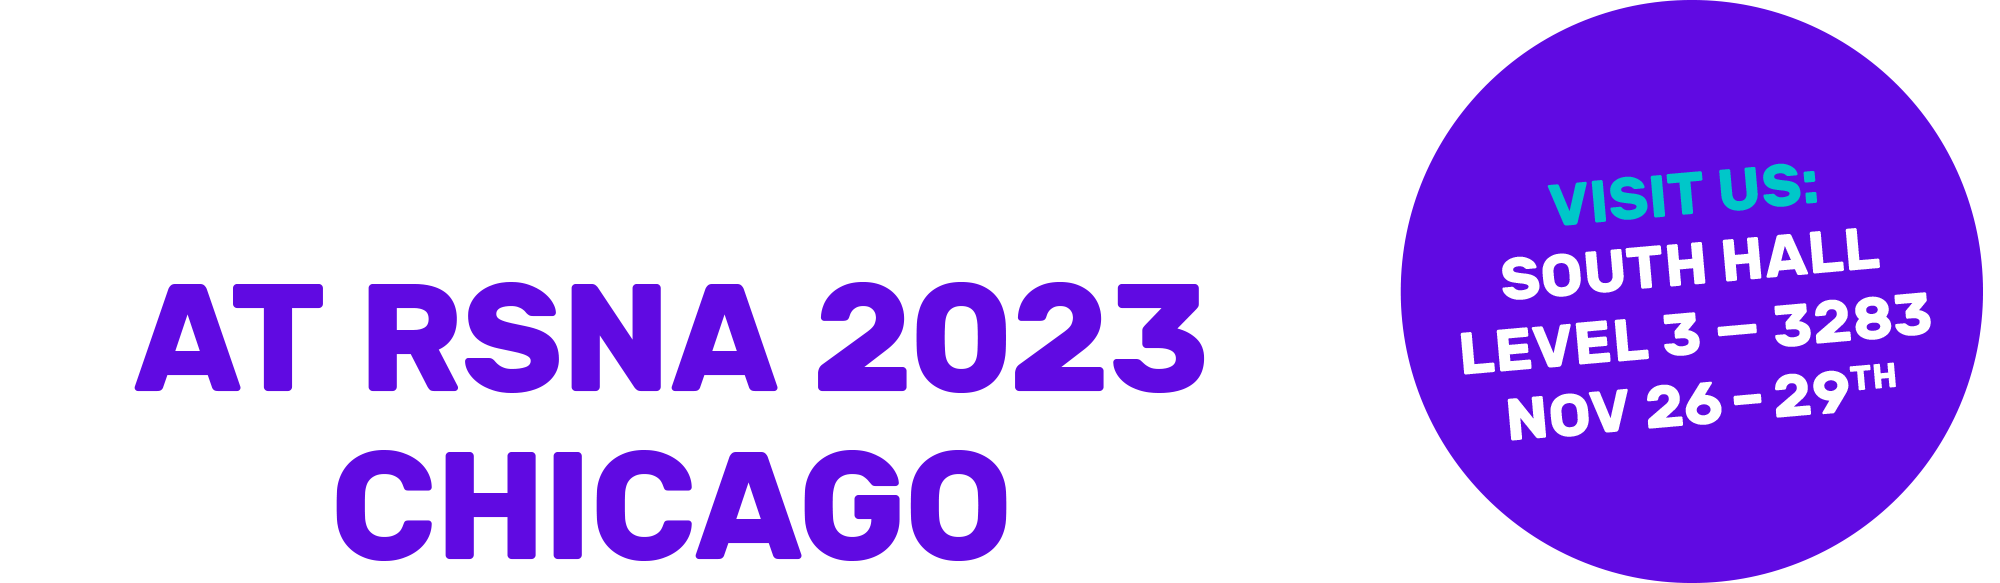 RadioReport RSNA 2023 unleash AI